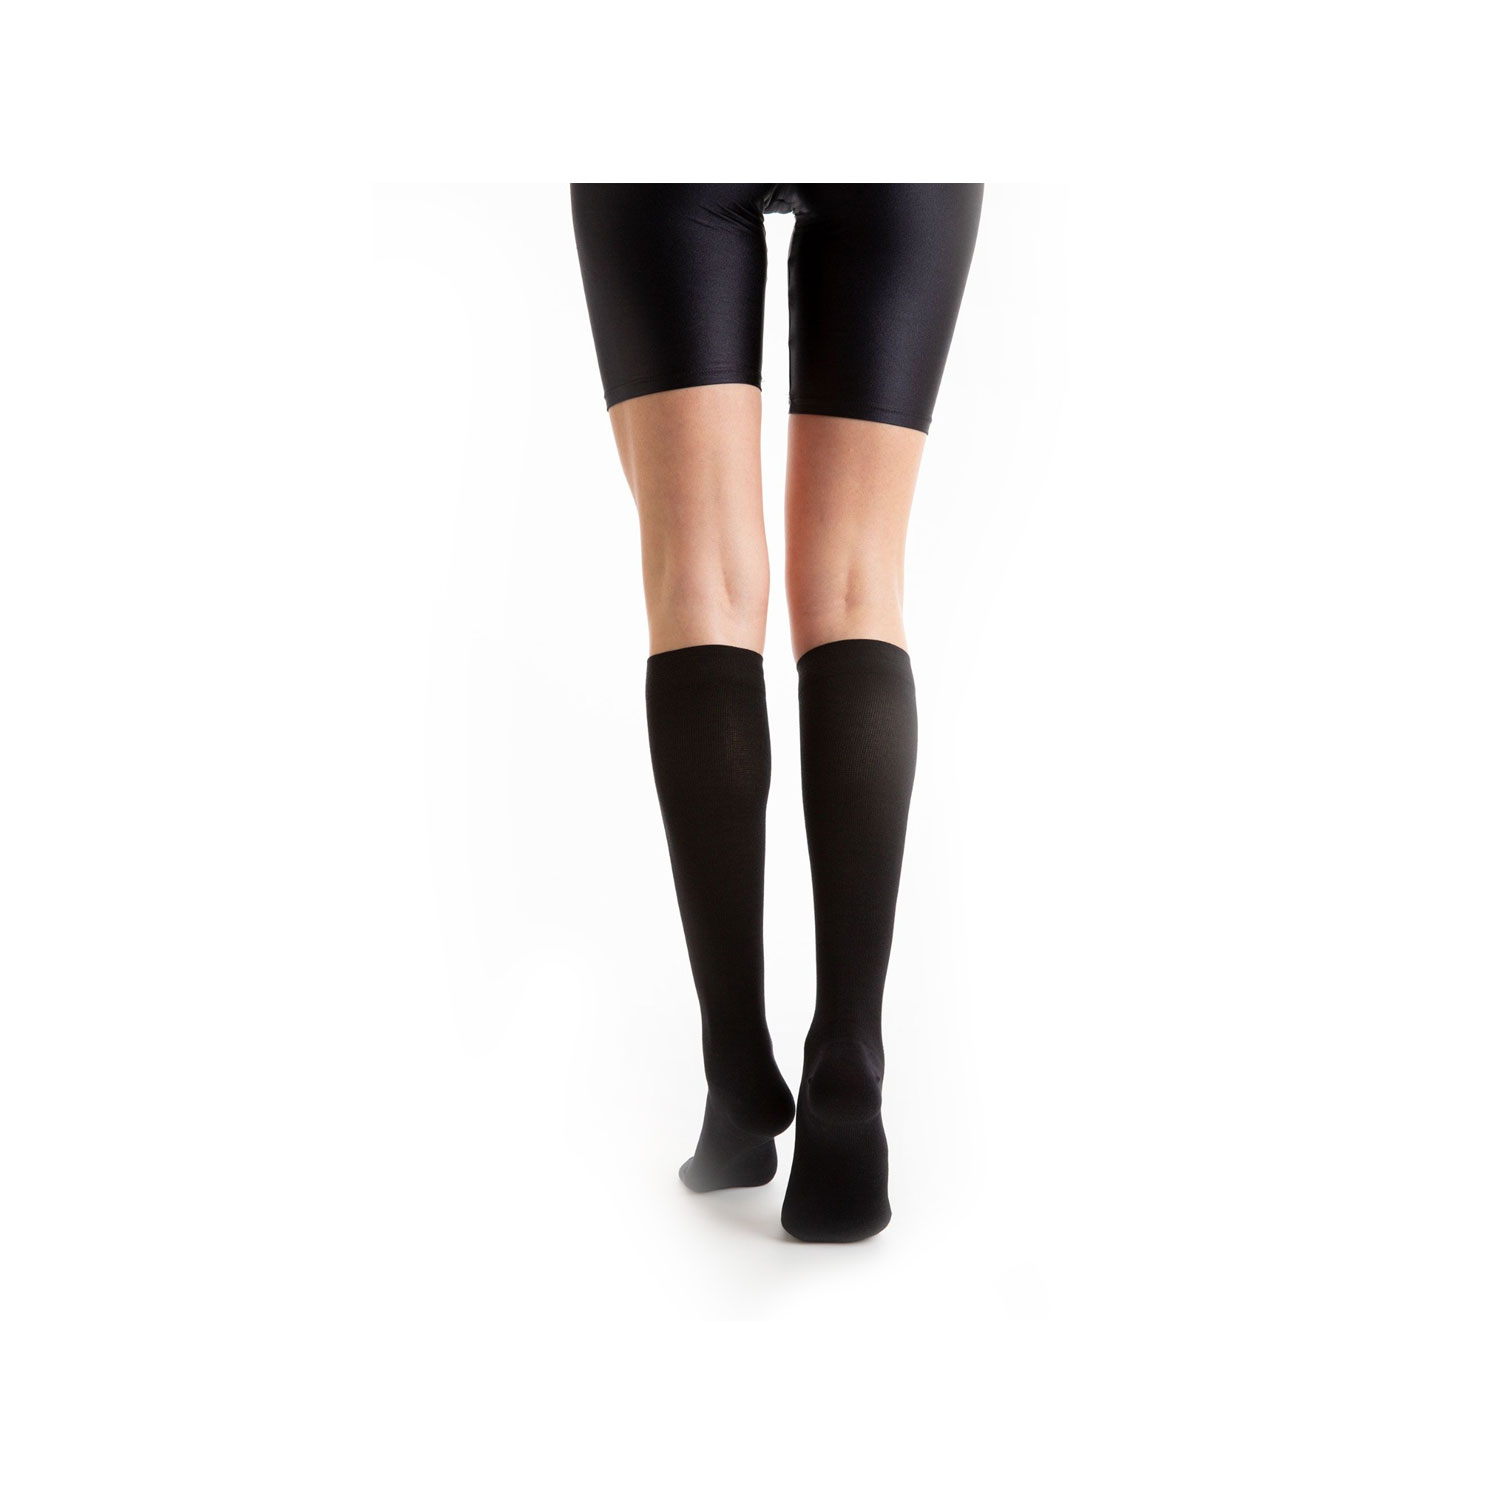 Relaxsan Cotton Socks 18-22 mmHg Knee High Black Colour Close Toe - Small -  Cureka - Online Health Care Products Shop